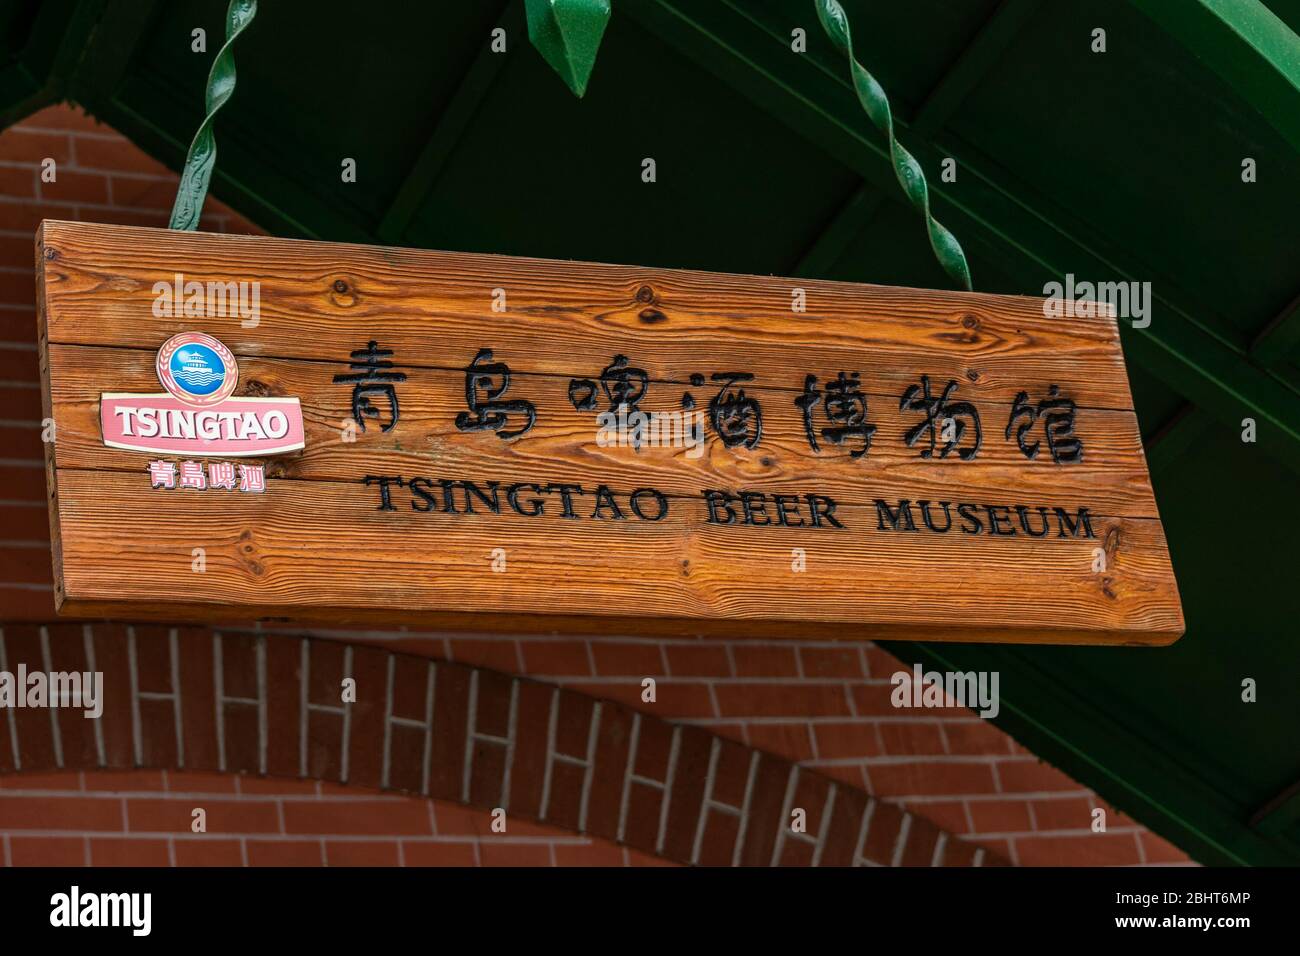 Qingdao / China - August 6, 2015: Tsingtao Beer Museum and Tsingtao Beer Brewery in Qingdao, Shandong Province, China Stock Photo